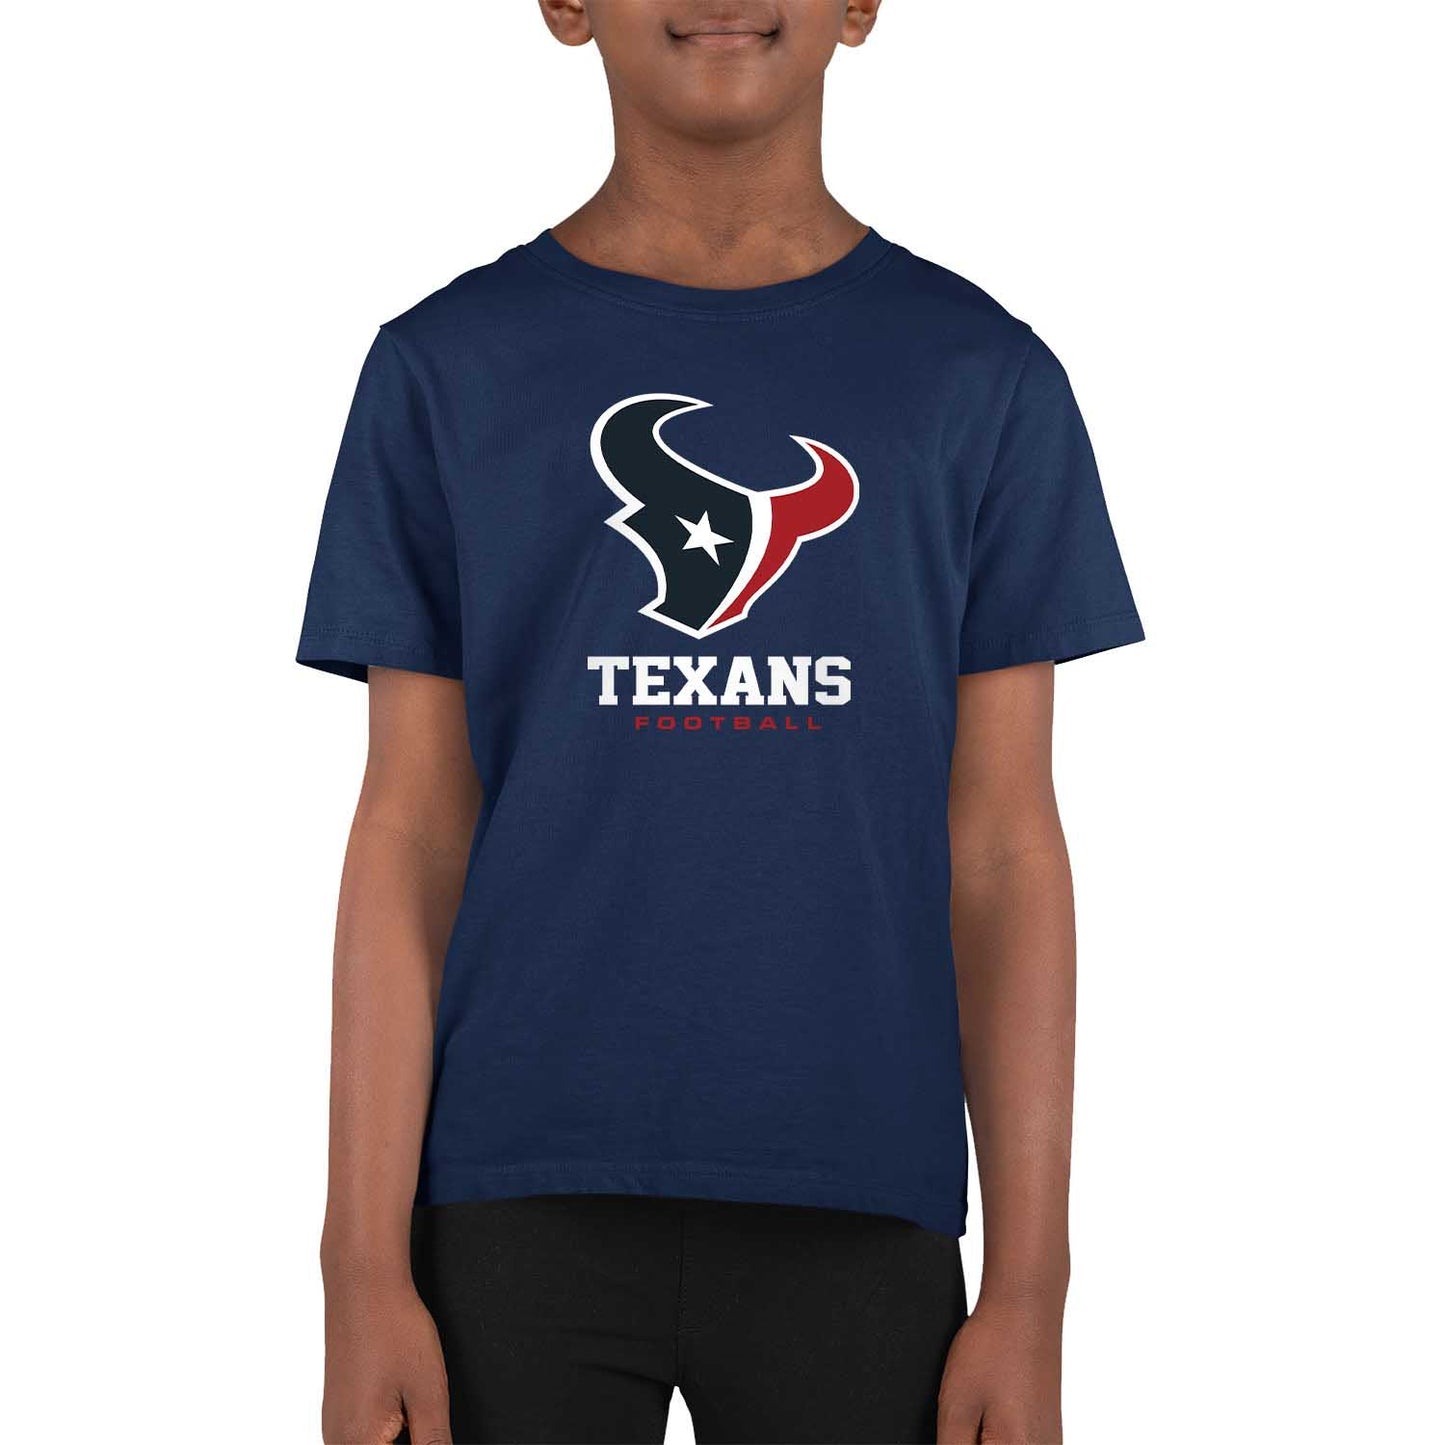 Houston Texans Youth NFL Ultimate Fan Logo Short Sleeve T-Shirt - Navy